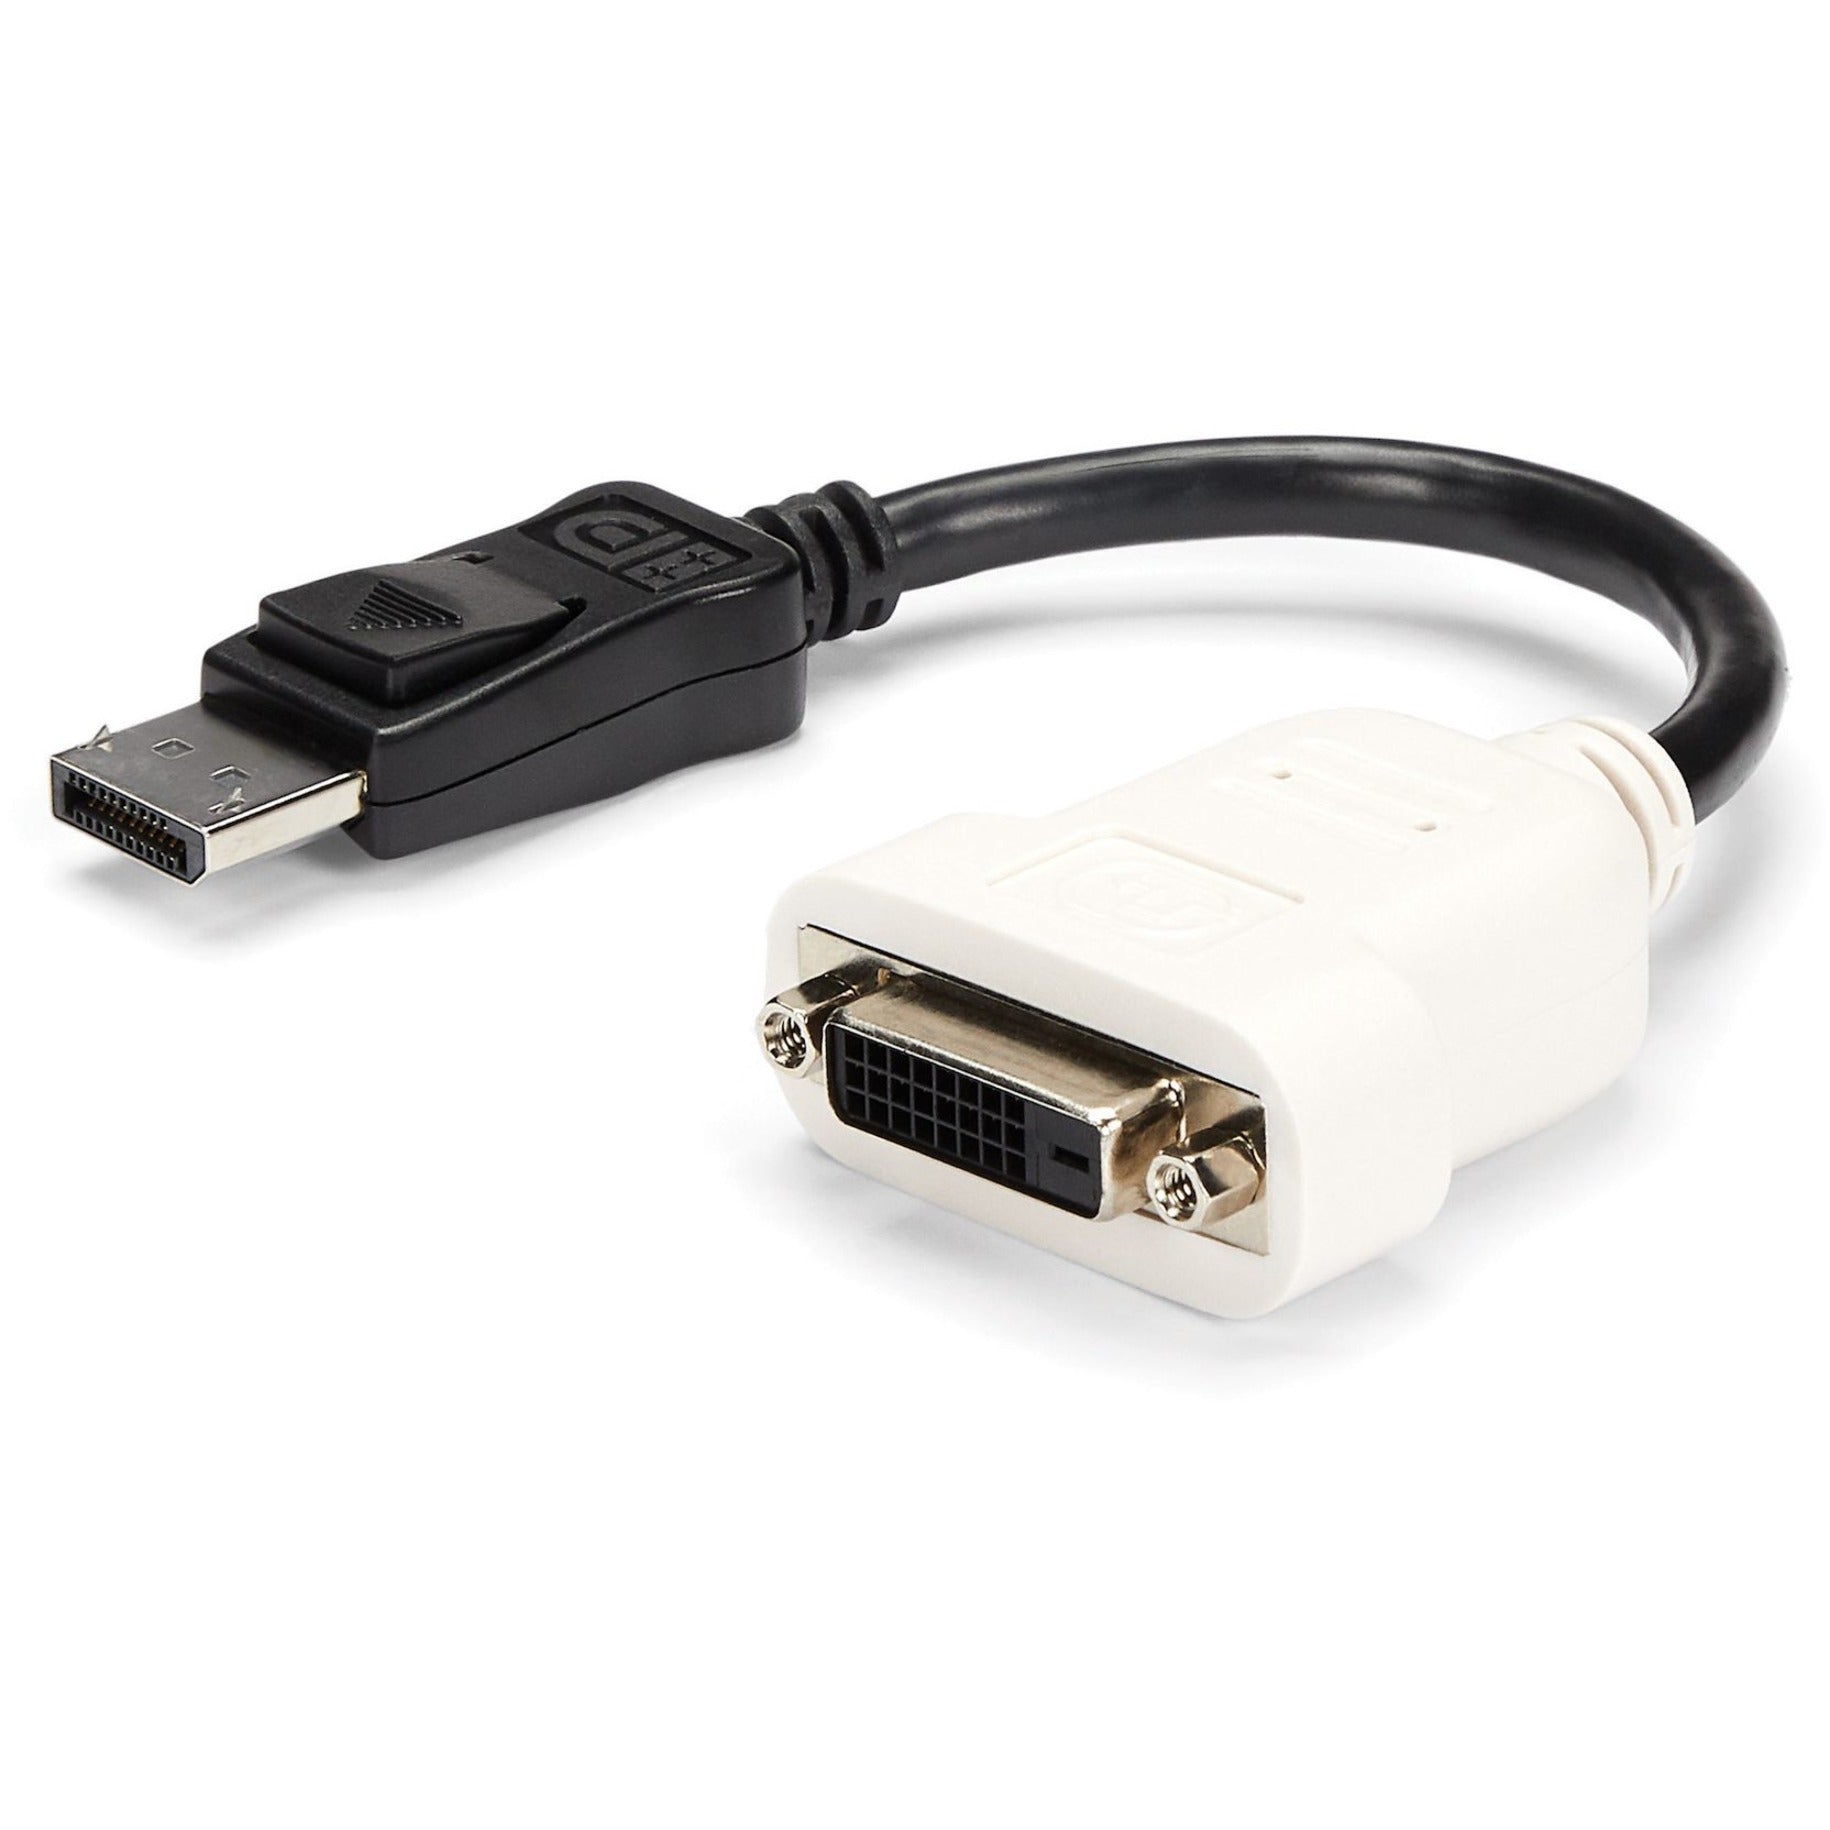 StarTech.com Cable de conversor de video DisplayPort a DVI DP2DVI Pasivo Soporte 1080p